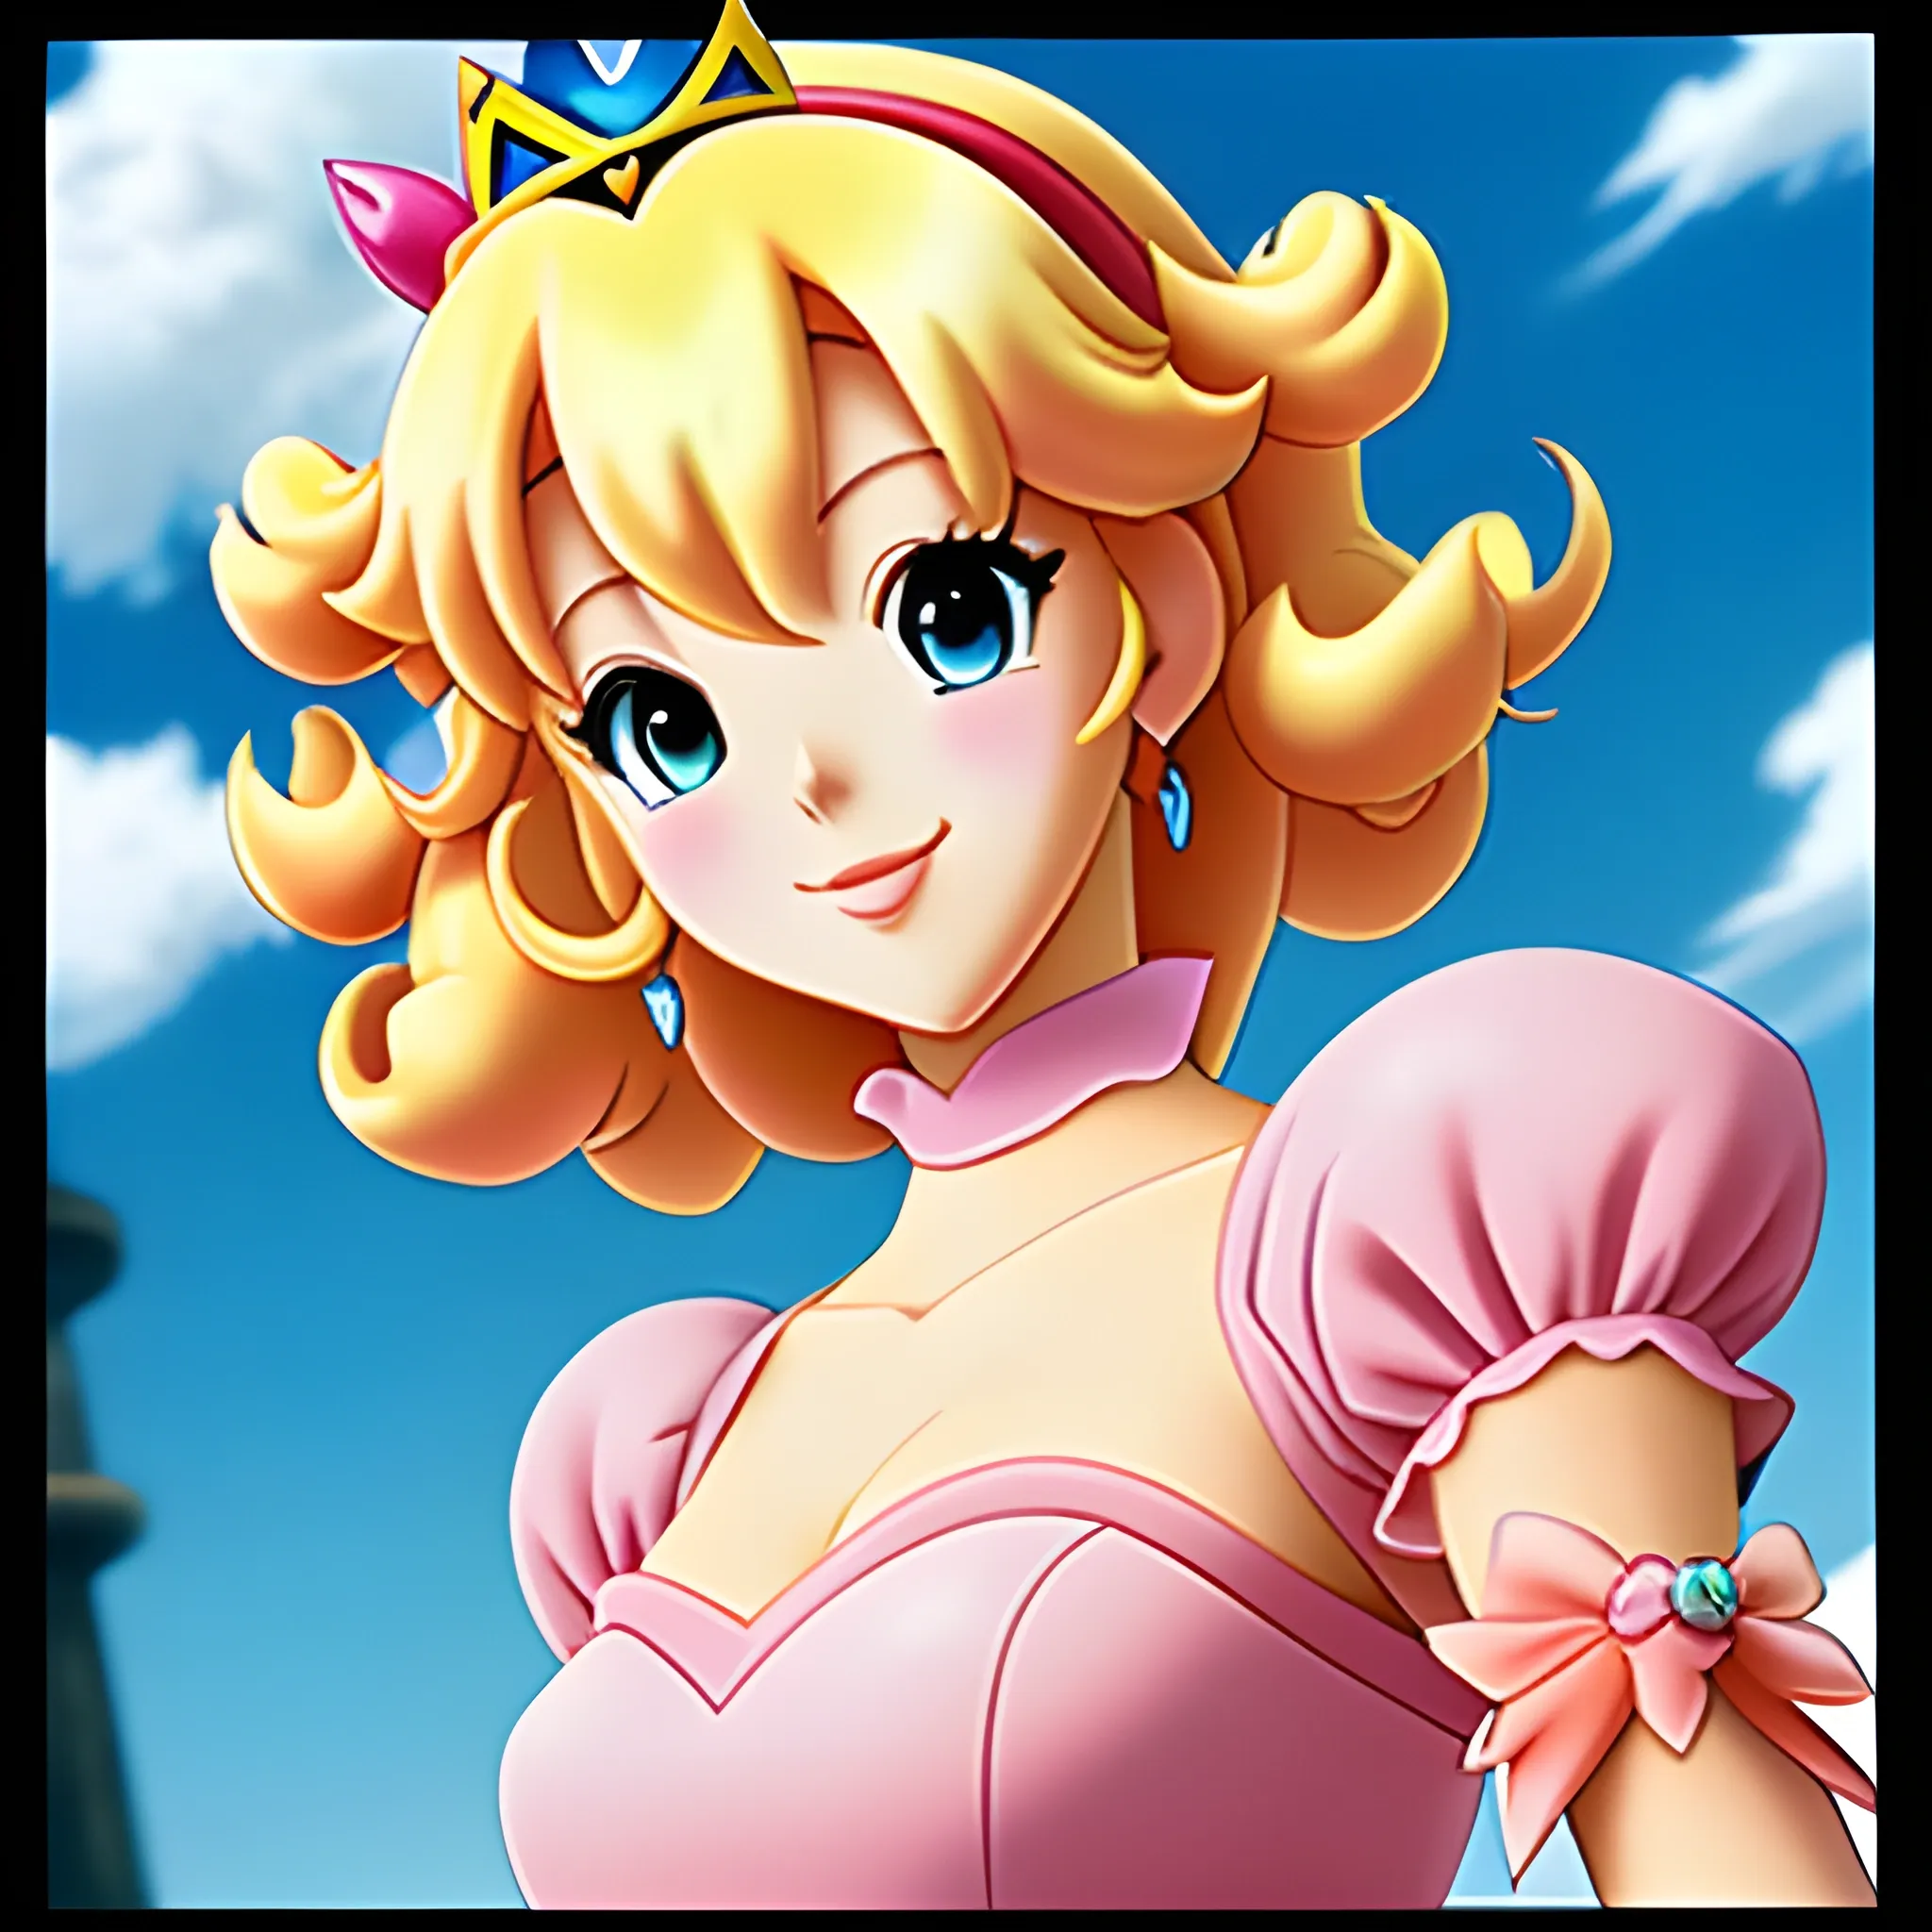 Princess Peach into an anime 2 by Yesenia62702 on DeviantArt